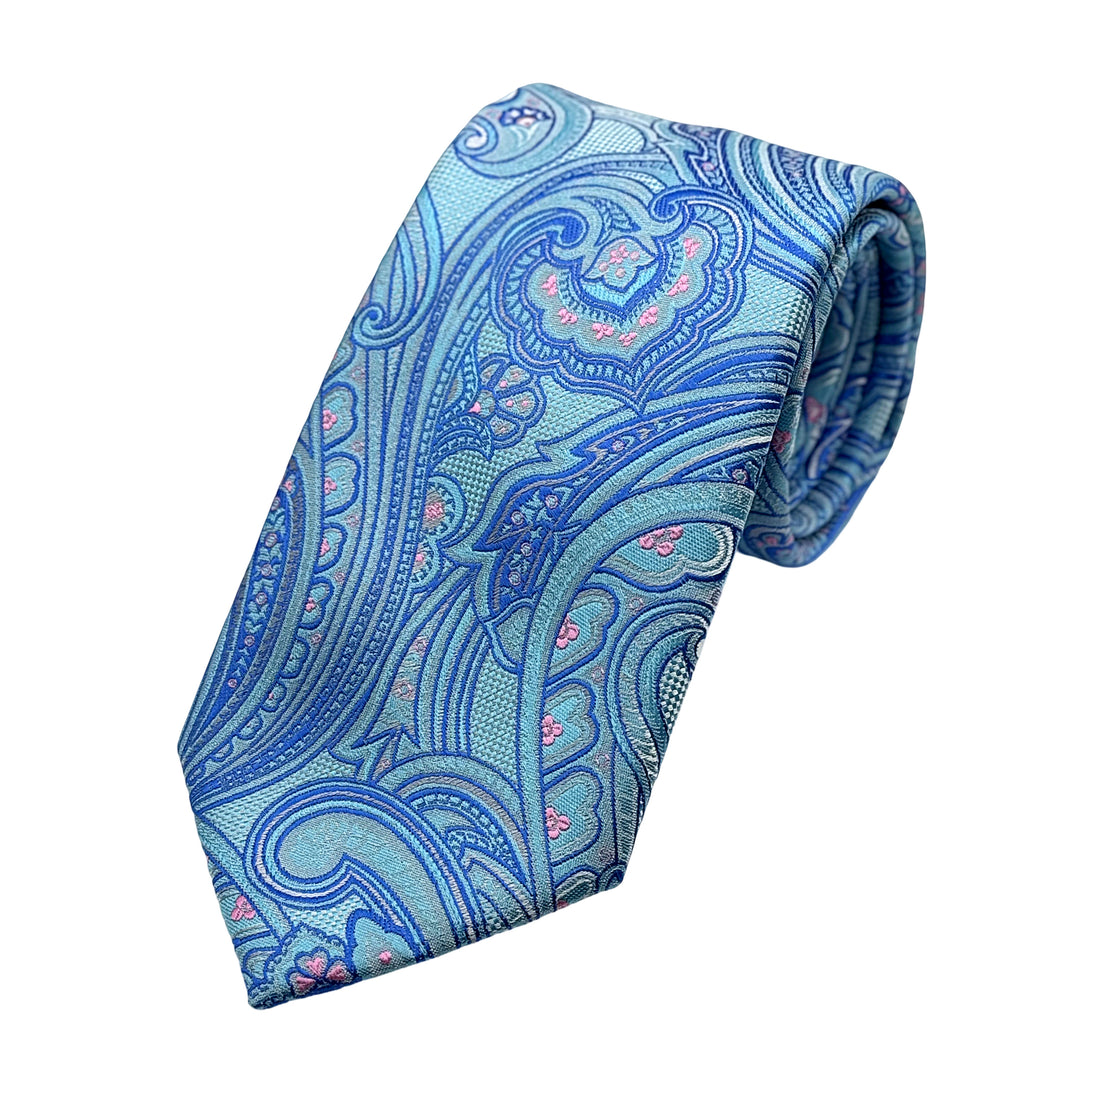 James Adelin Mens Luxury Microfibre Neck Tie in Satin Paisley Weave Design